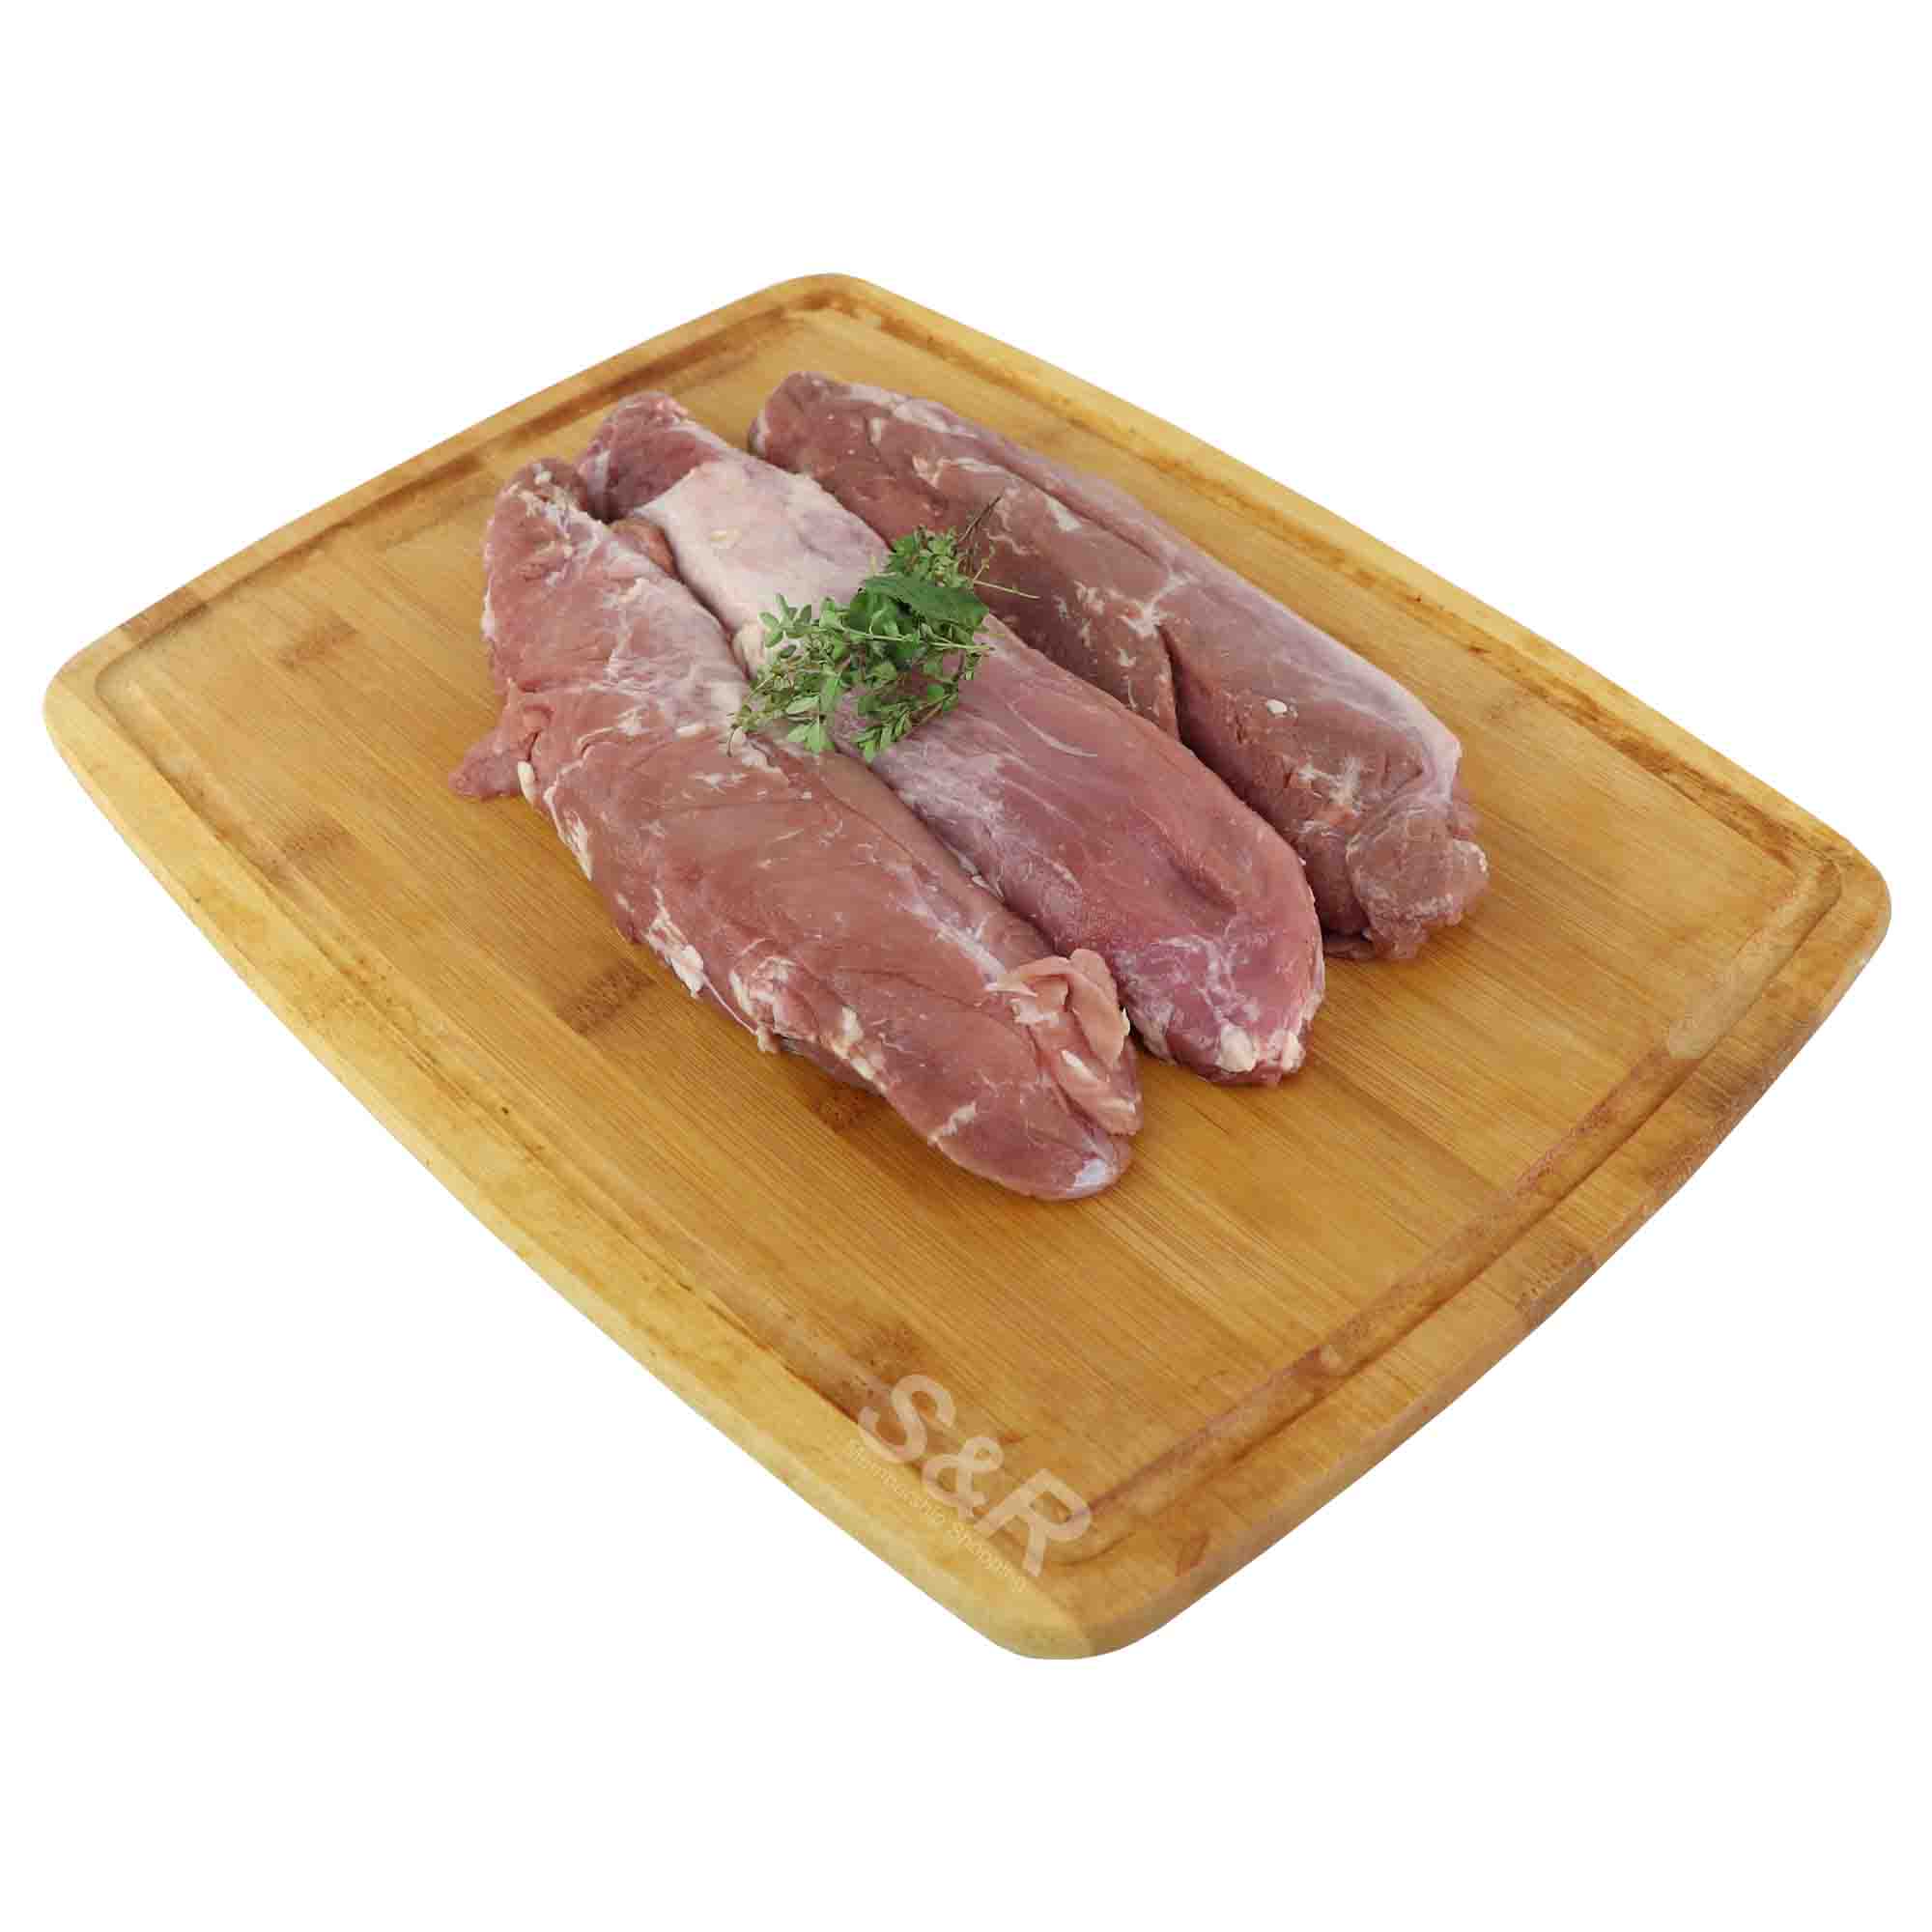 Members' Value Pork Tenderloin approx. 1.7kg